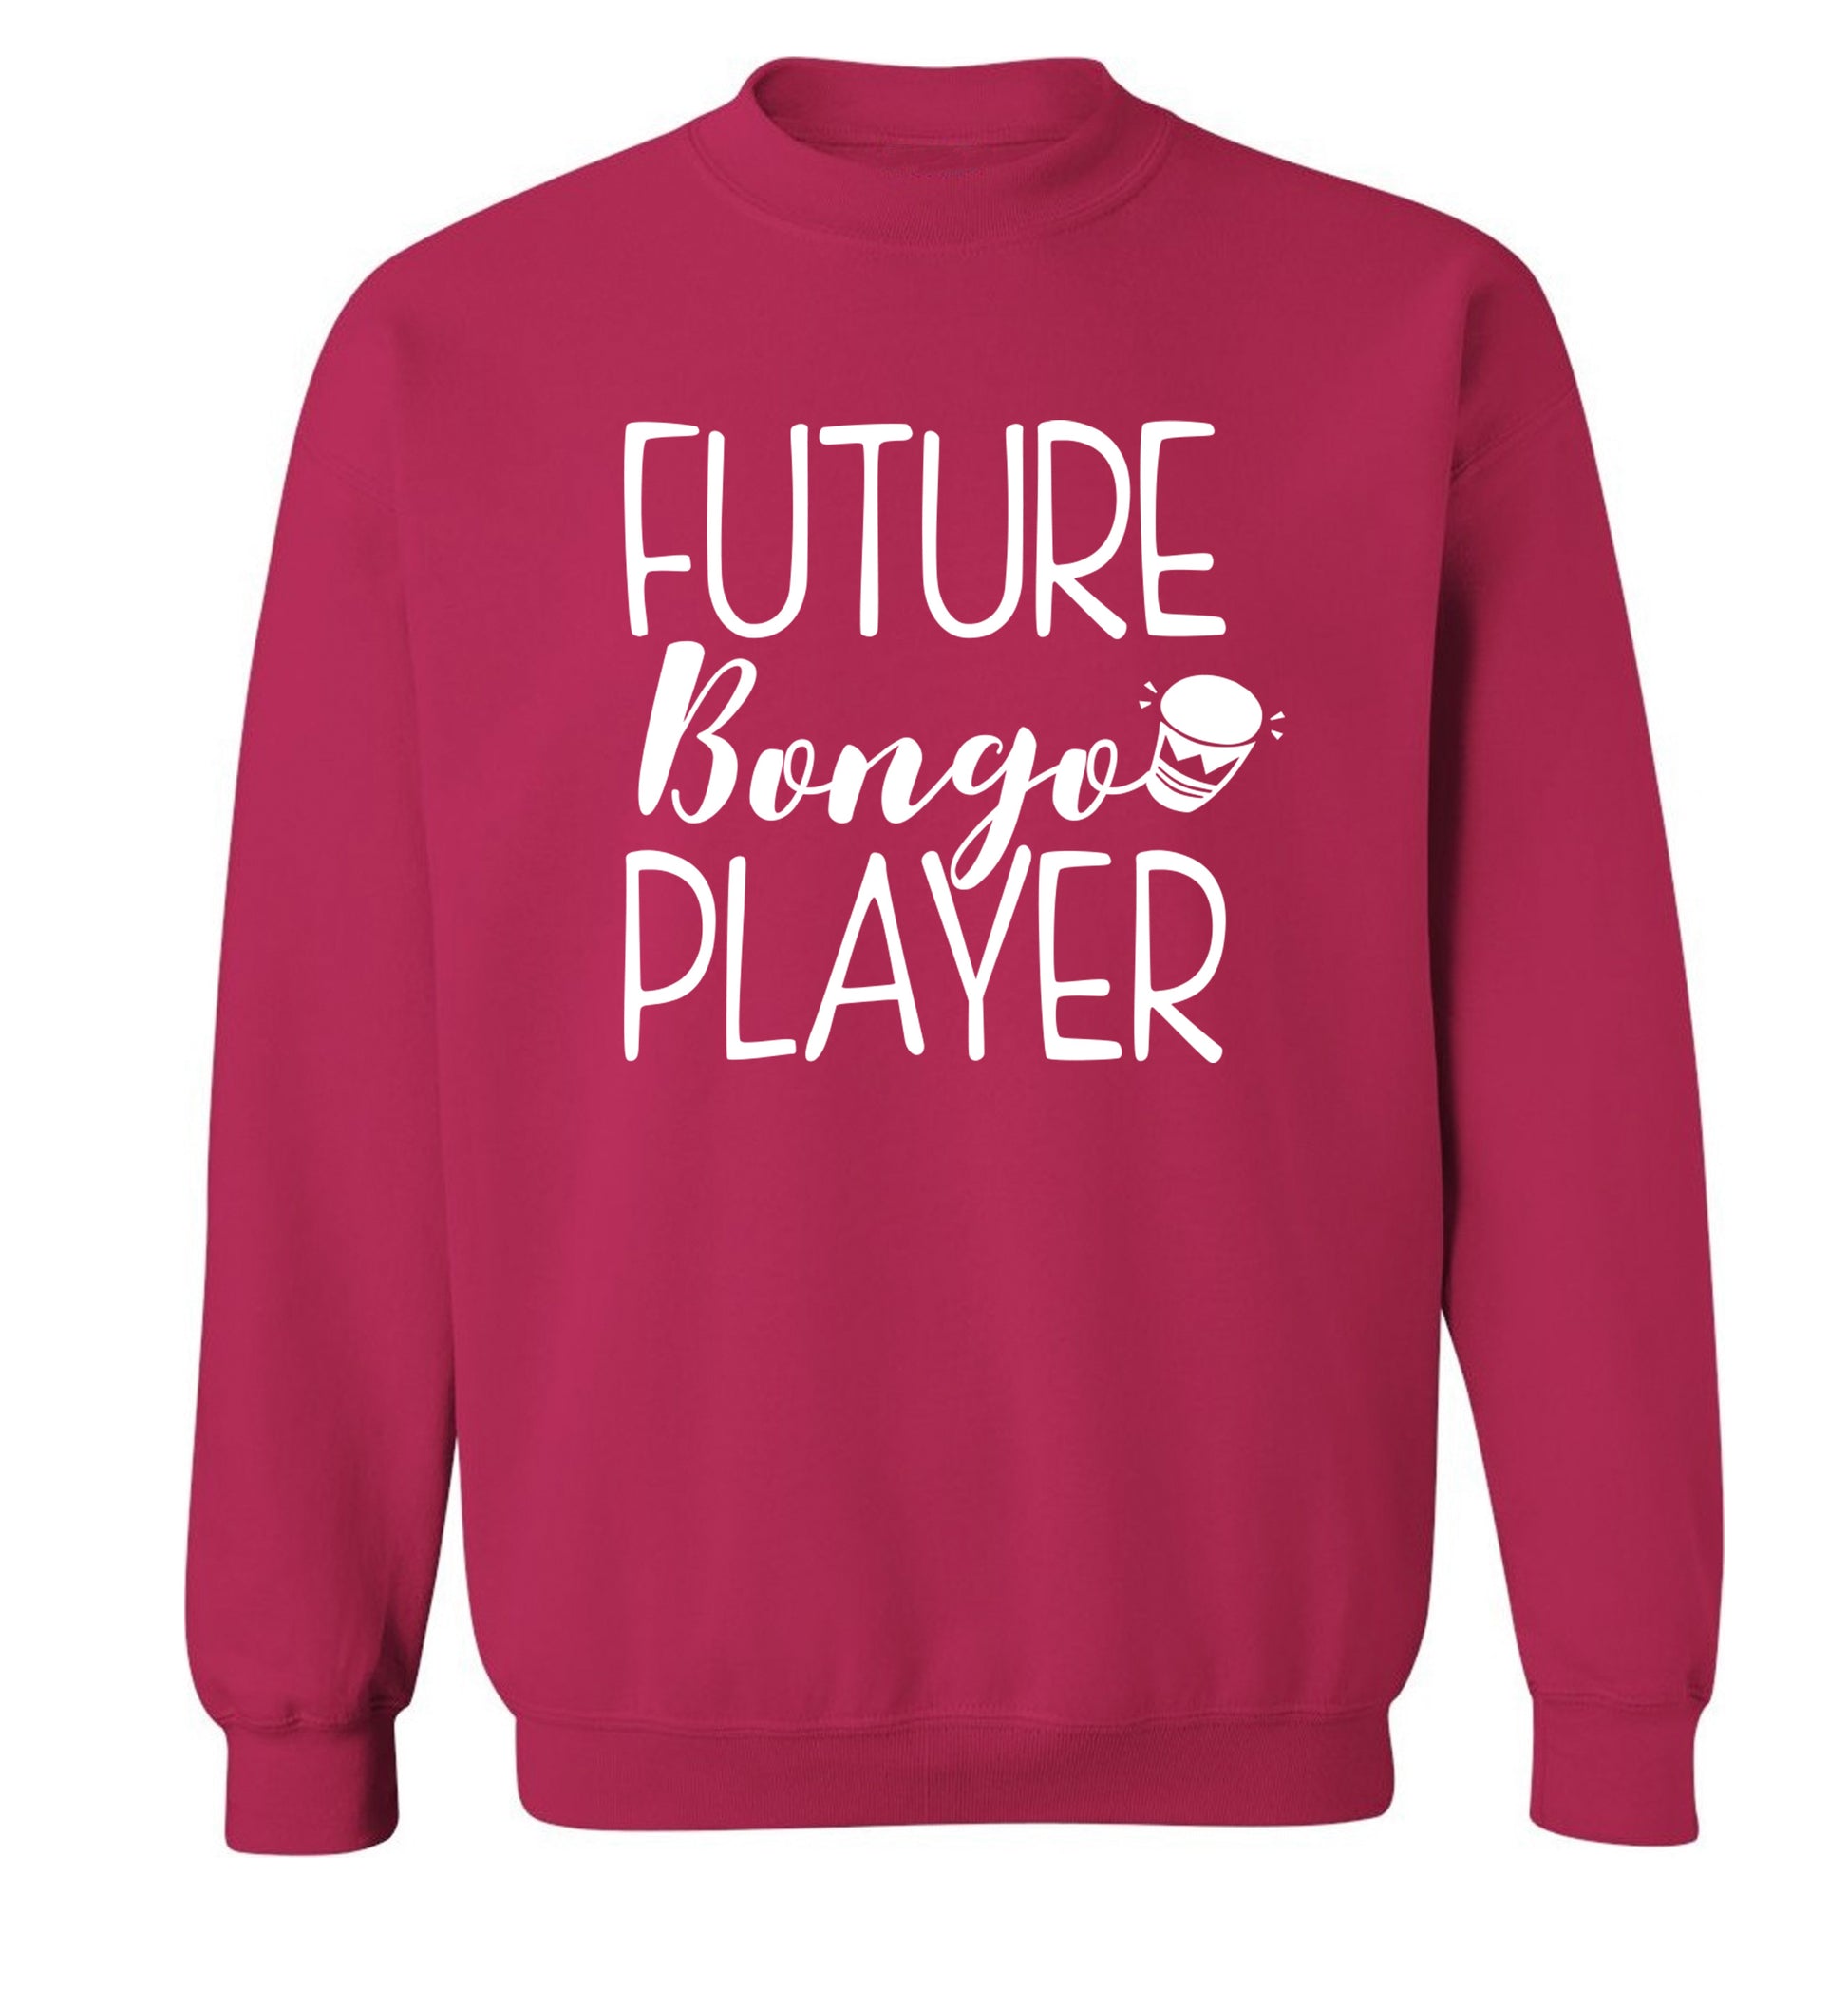 Future bongo player Adult's unisex pink Sweater 2XL